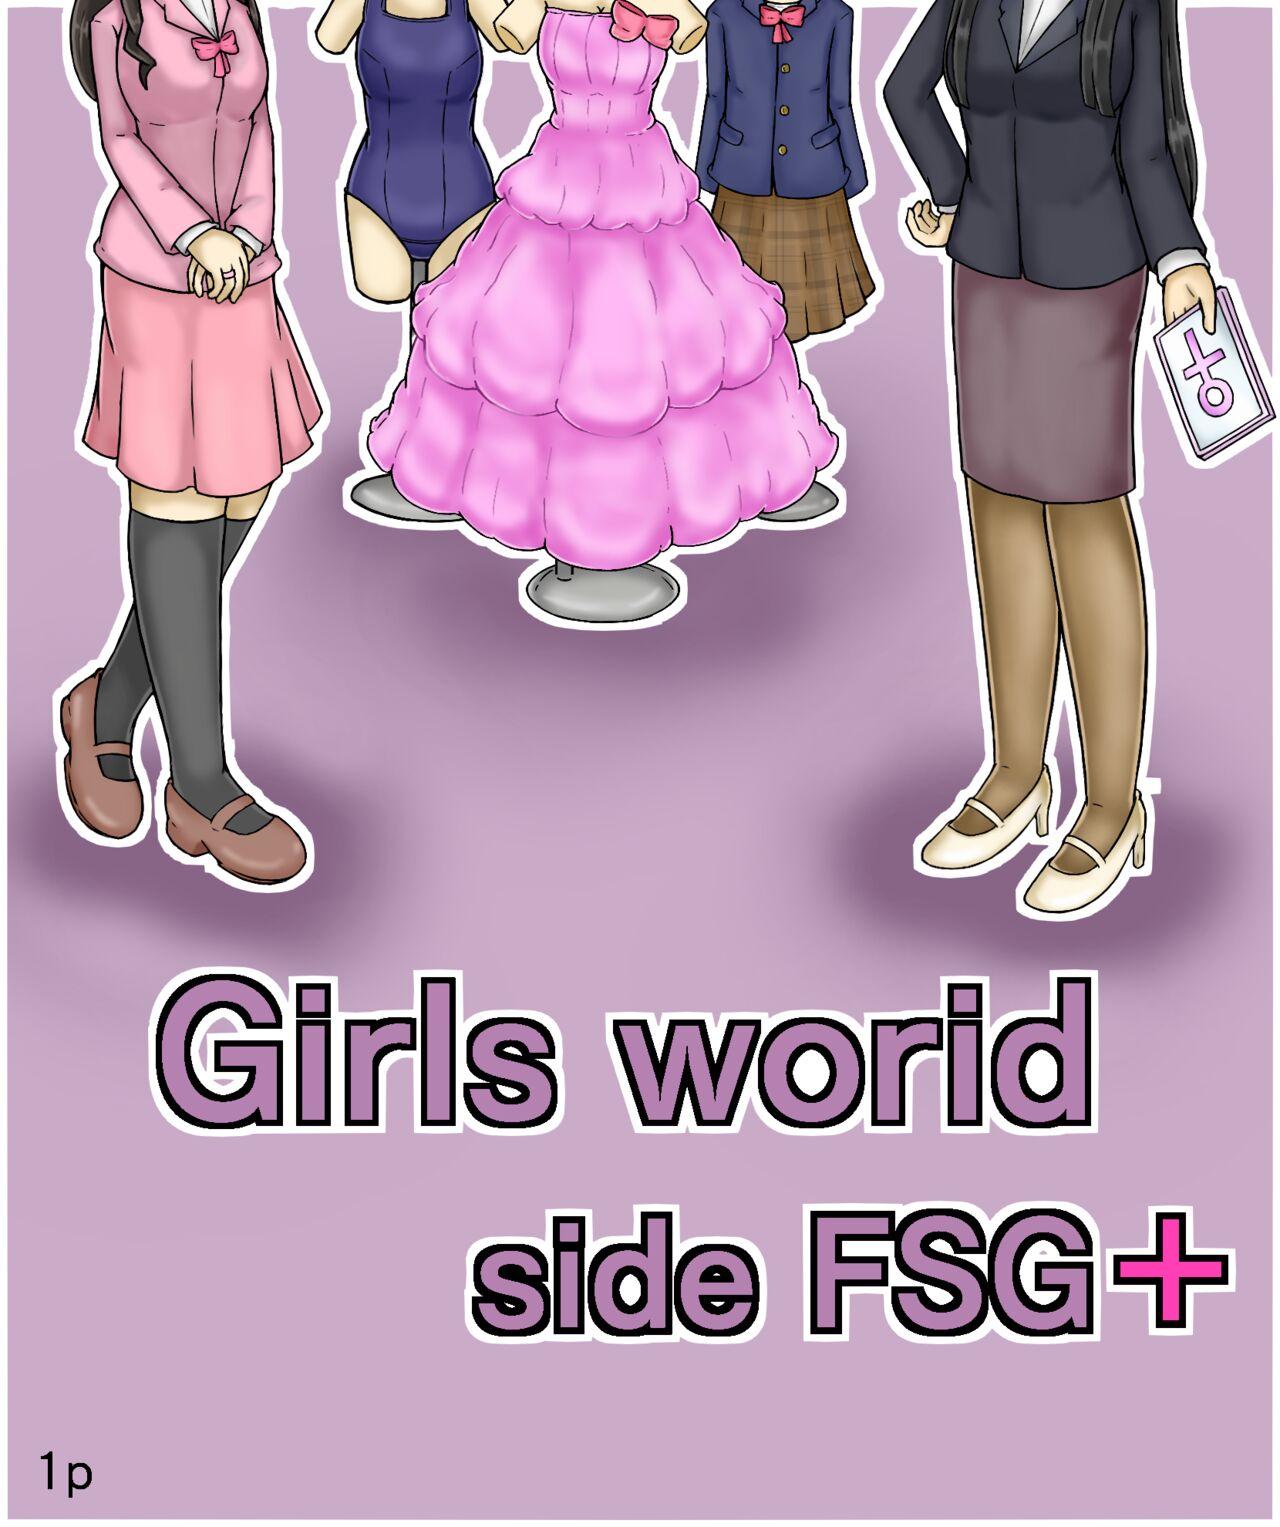 Girls World FSG+ 0